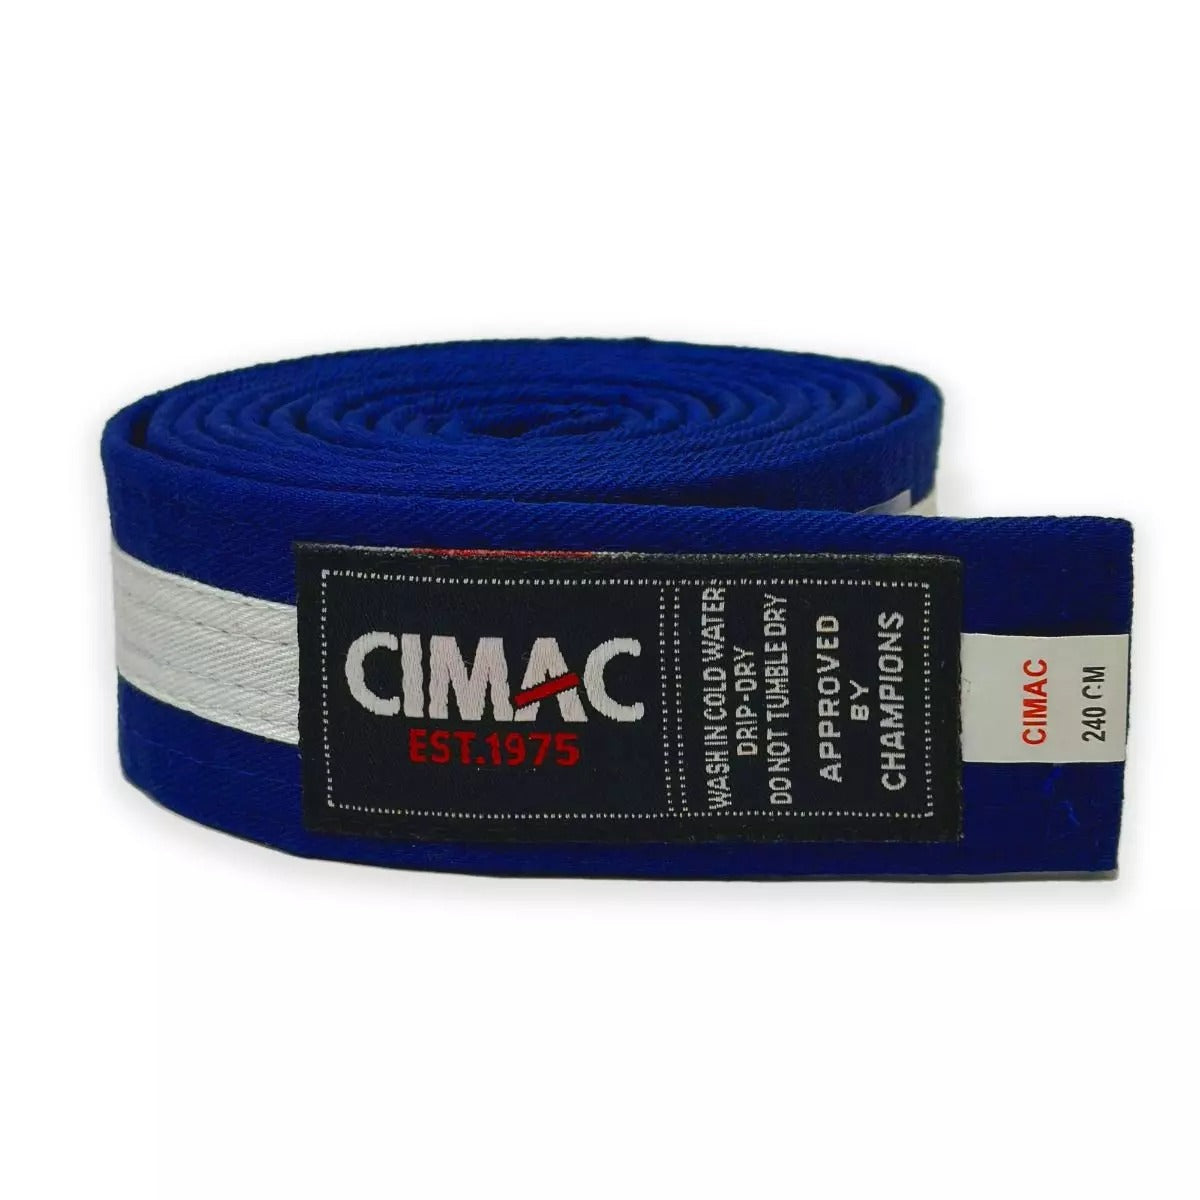 Cimac White Stripe Colour Karate Belt